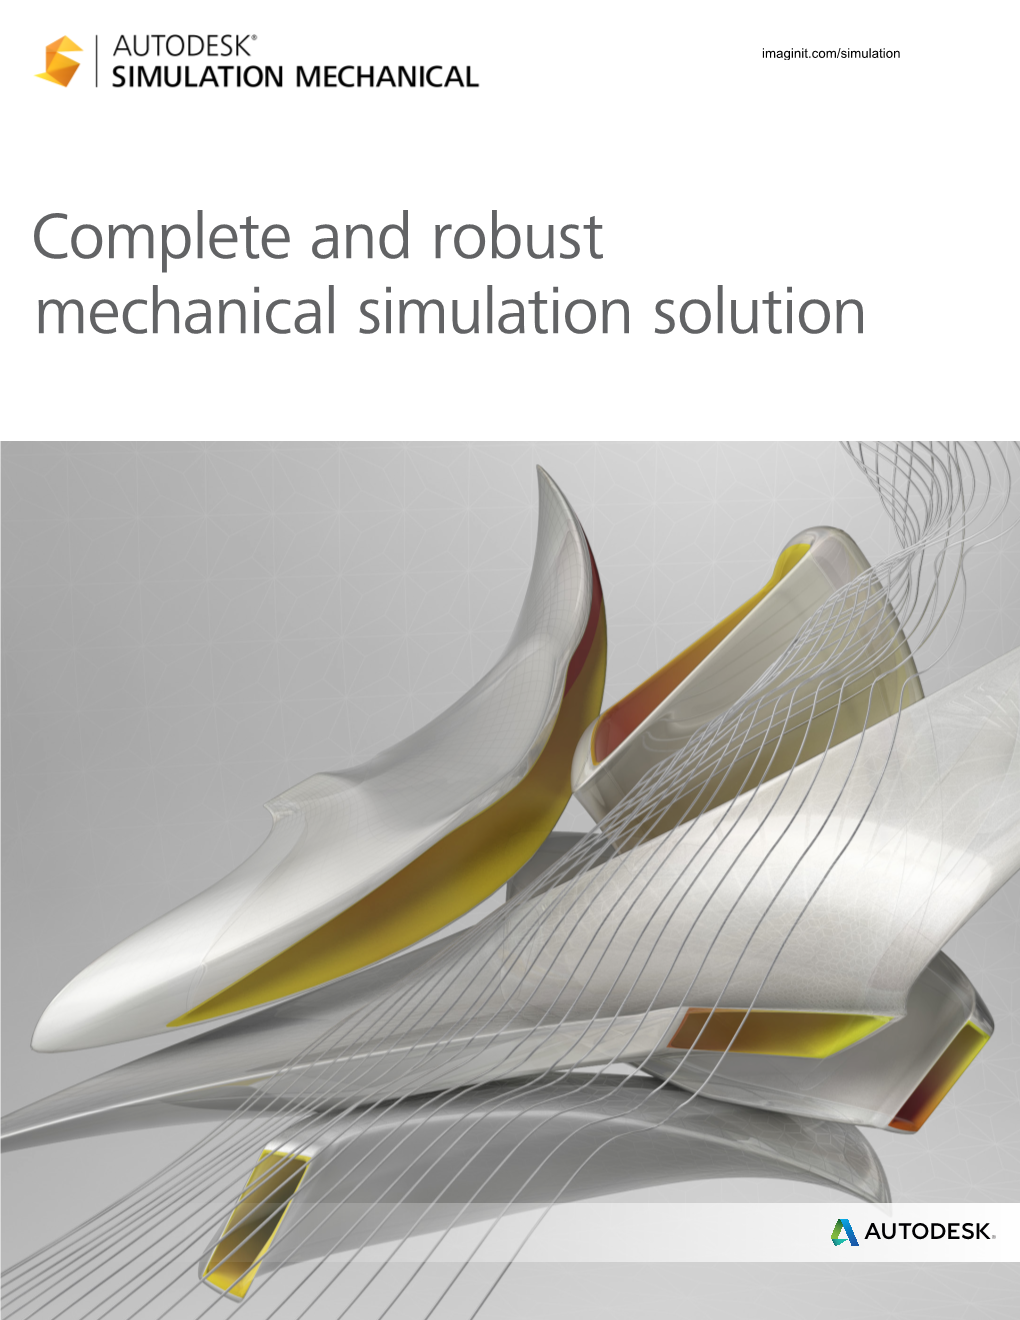 Autodesk Simulation Mechanical 2016 Overview Brochure